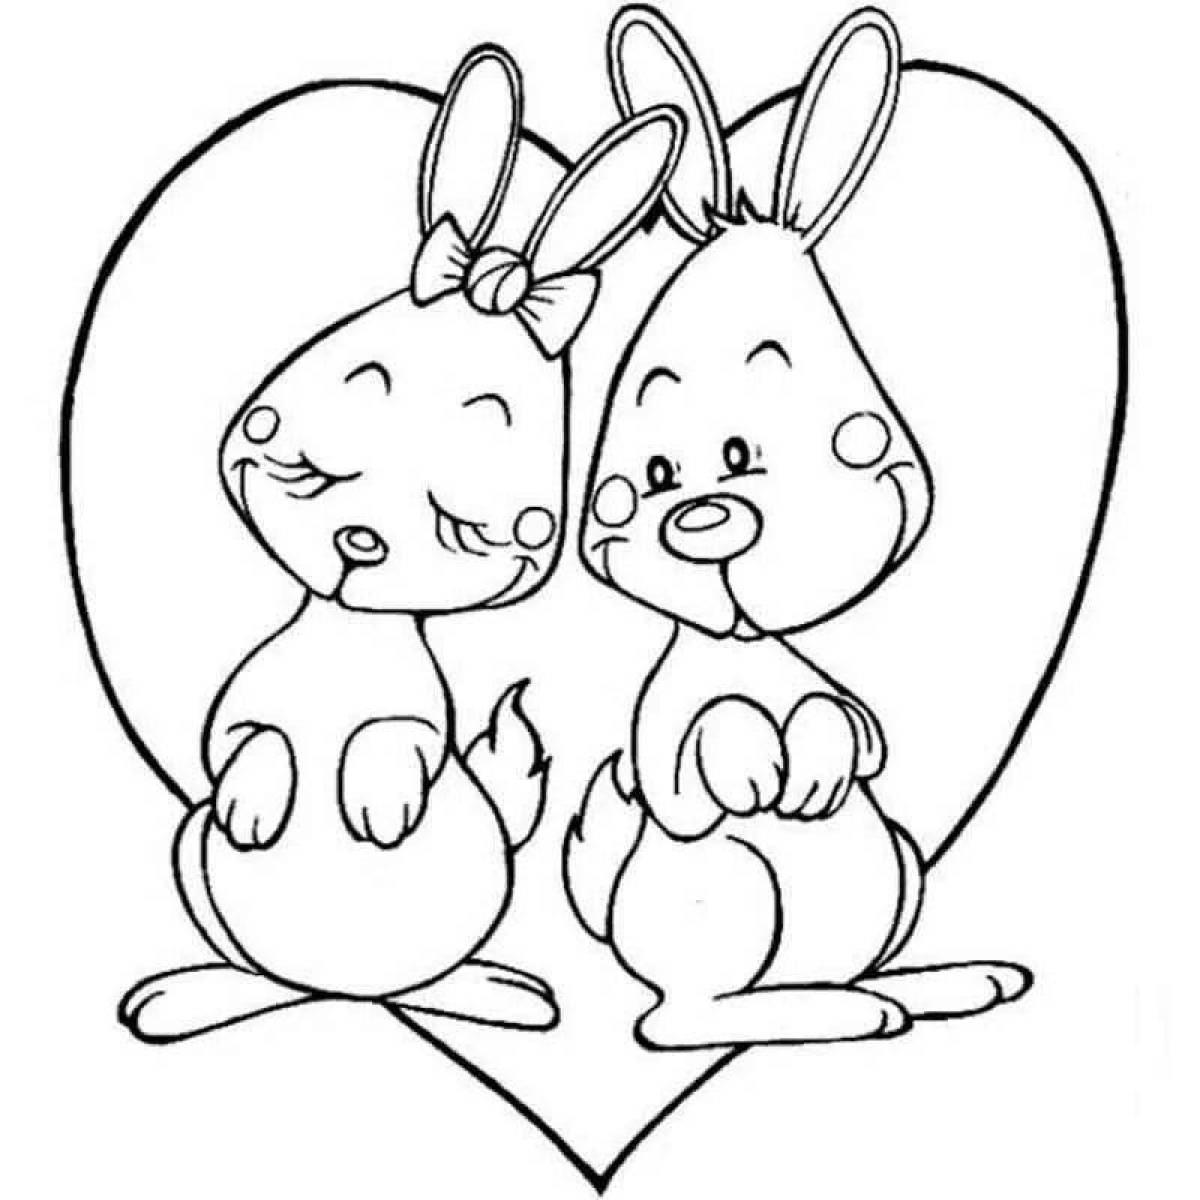 Bunny with a heart #4